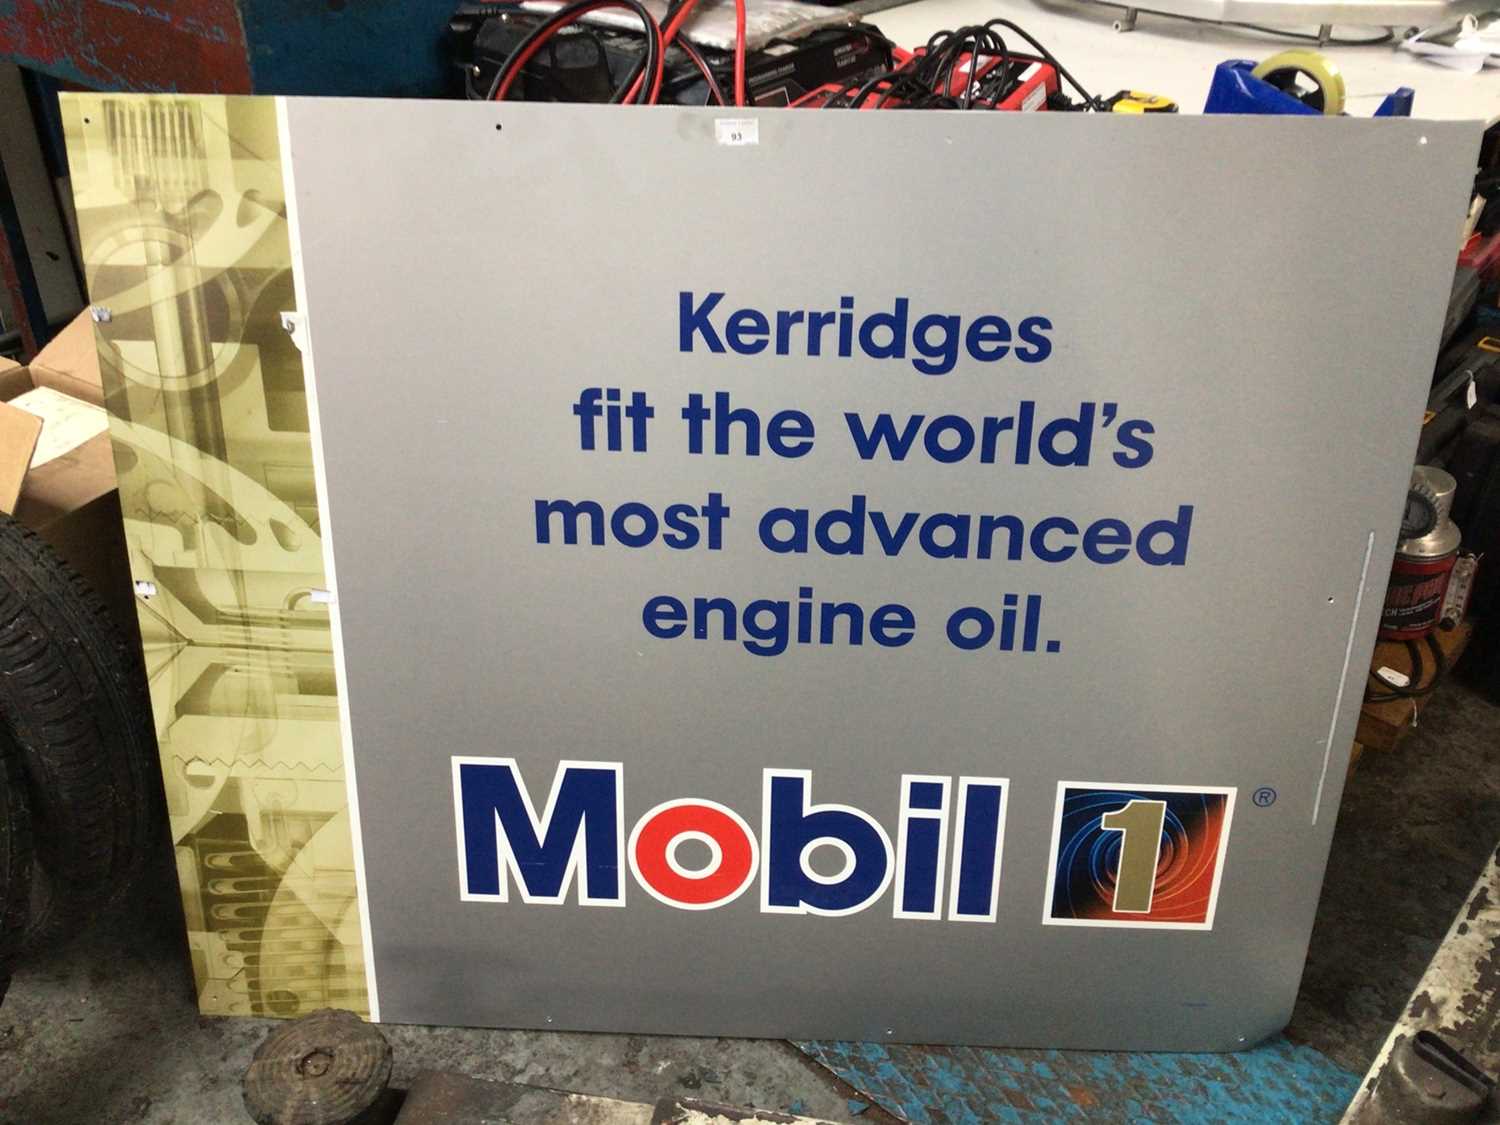 Lot 93 - Mobil 1 metal garage sign, Mobil 1, "Kerridges fit the World's most advanced engine oil", 1250 mm x 1050mm